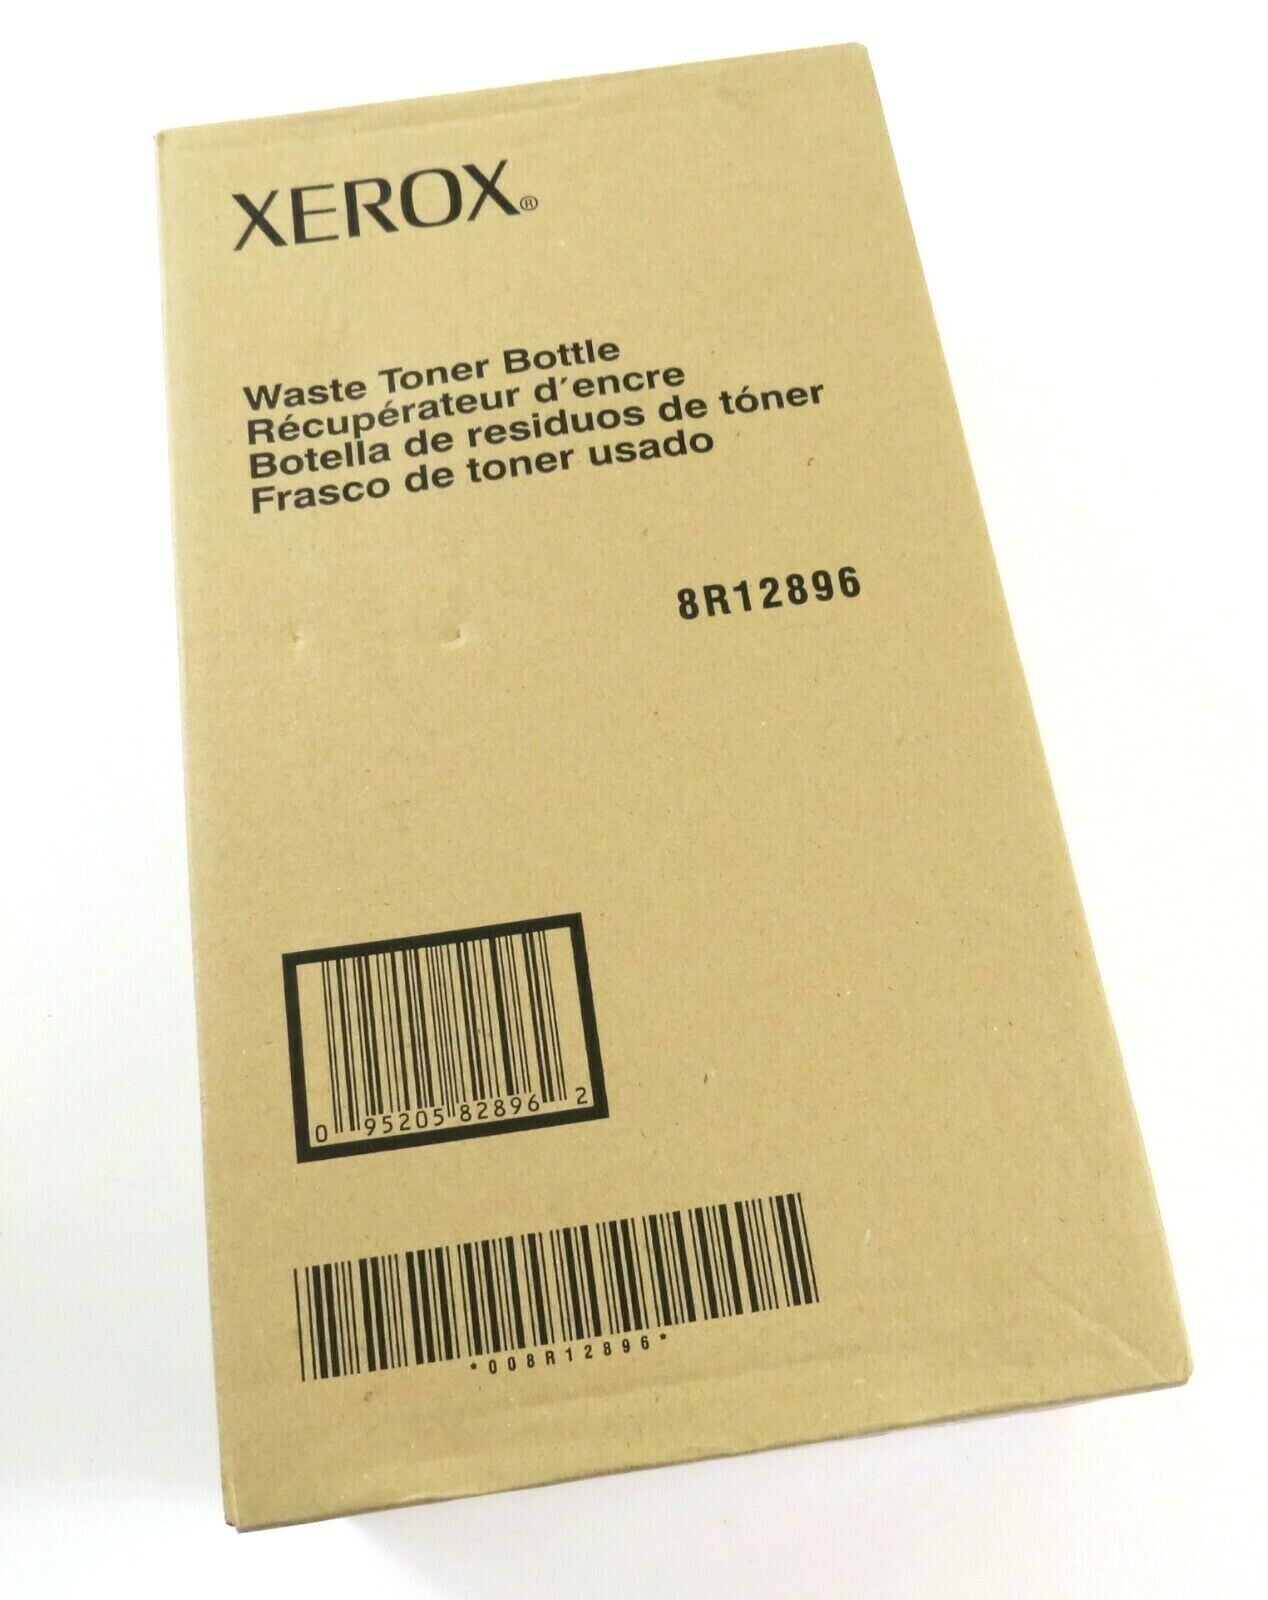 Set of 2 Old Stock Xerox 8R12896 OEM Waste Toner Bottles in Boxes